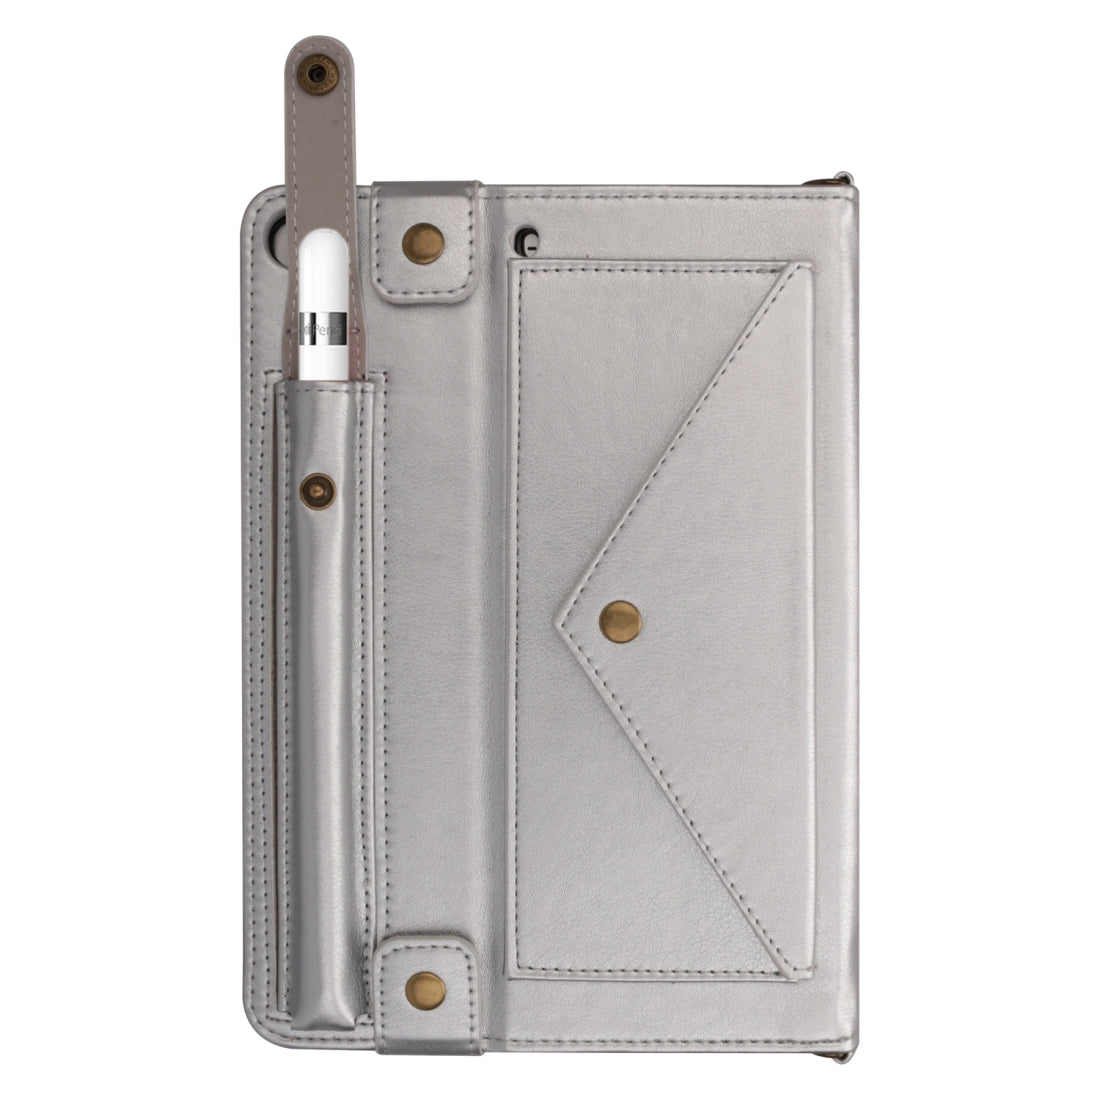 For iPad mini 5 / 4 / 3 / 2 / 1 Envelope Horizontal Flip PU Leather Case with Card Slots & Pen Slots